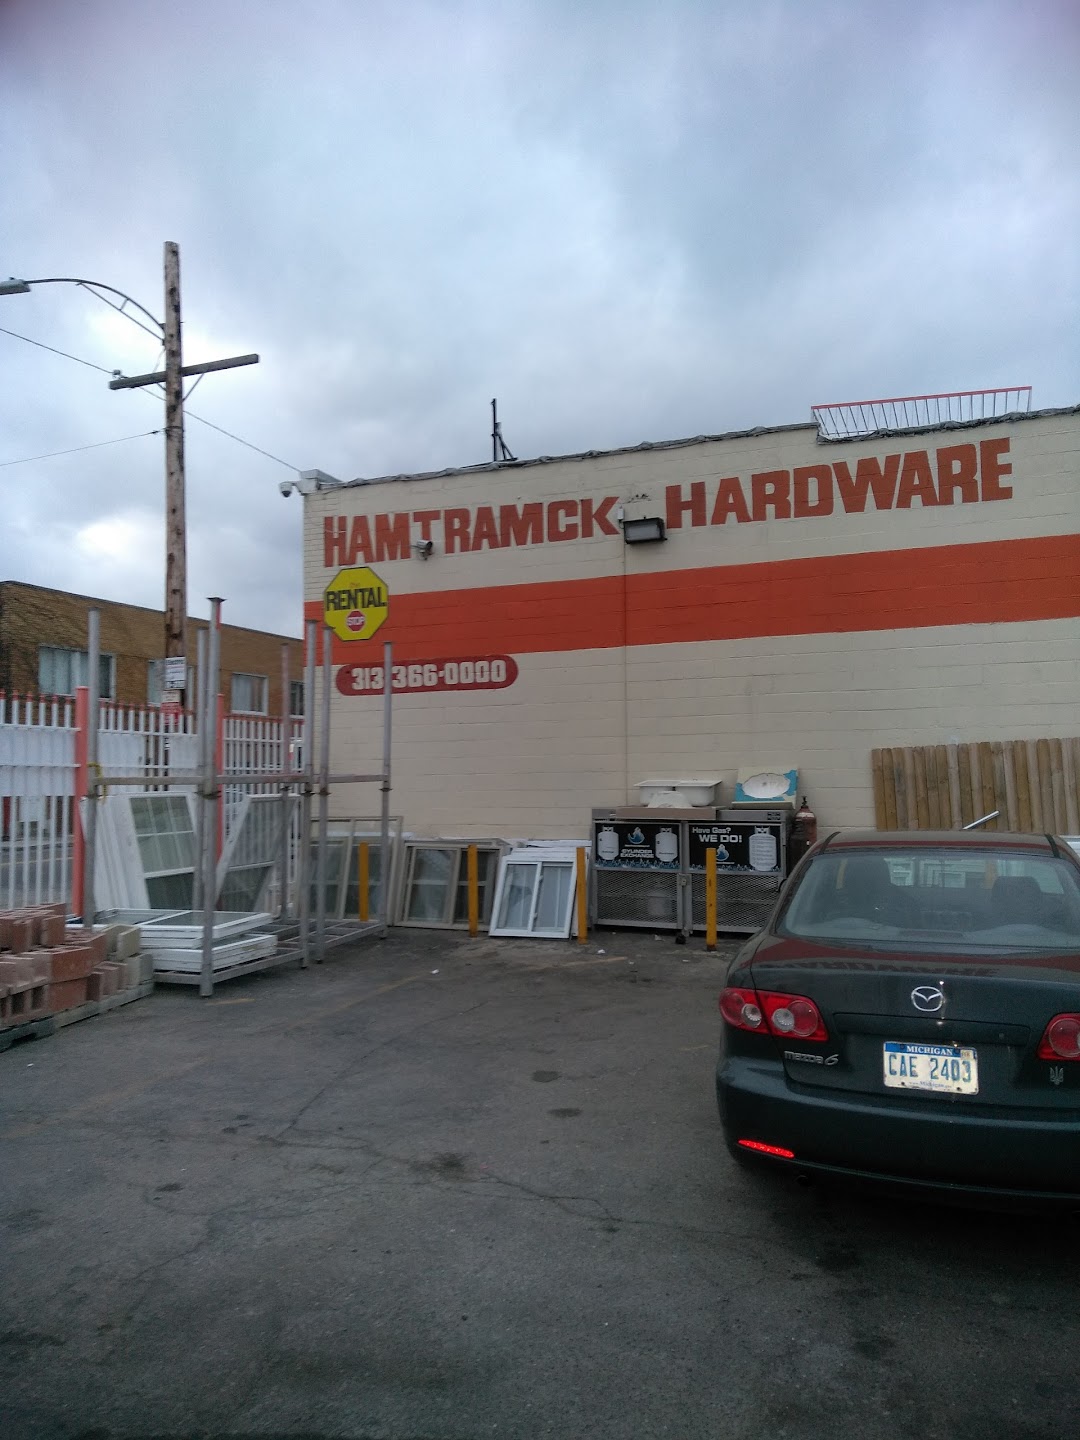 Hamtramck Hardware